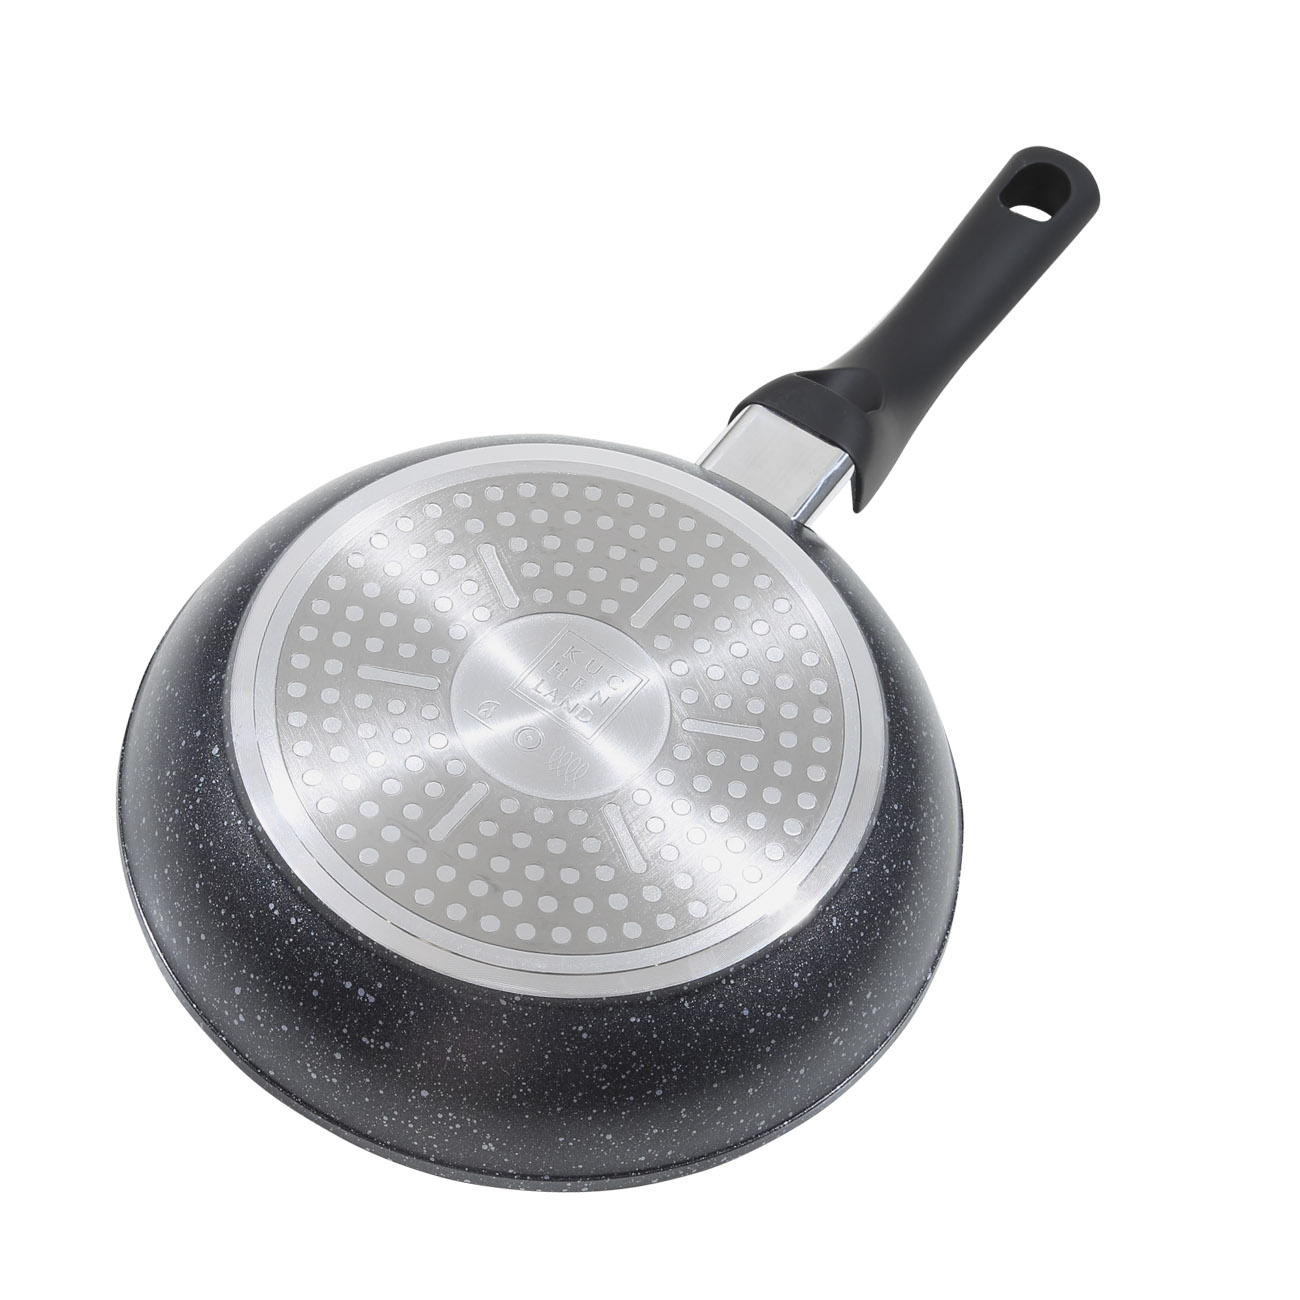 Frying pan, 20 cm, coated, aluminum, Proper изображение № 3